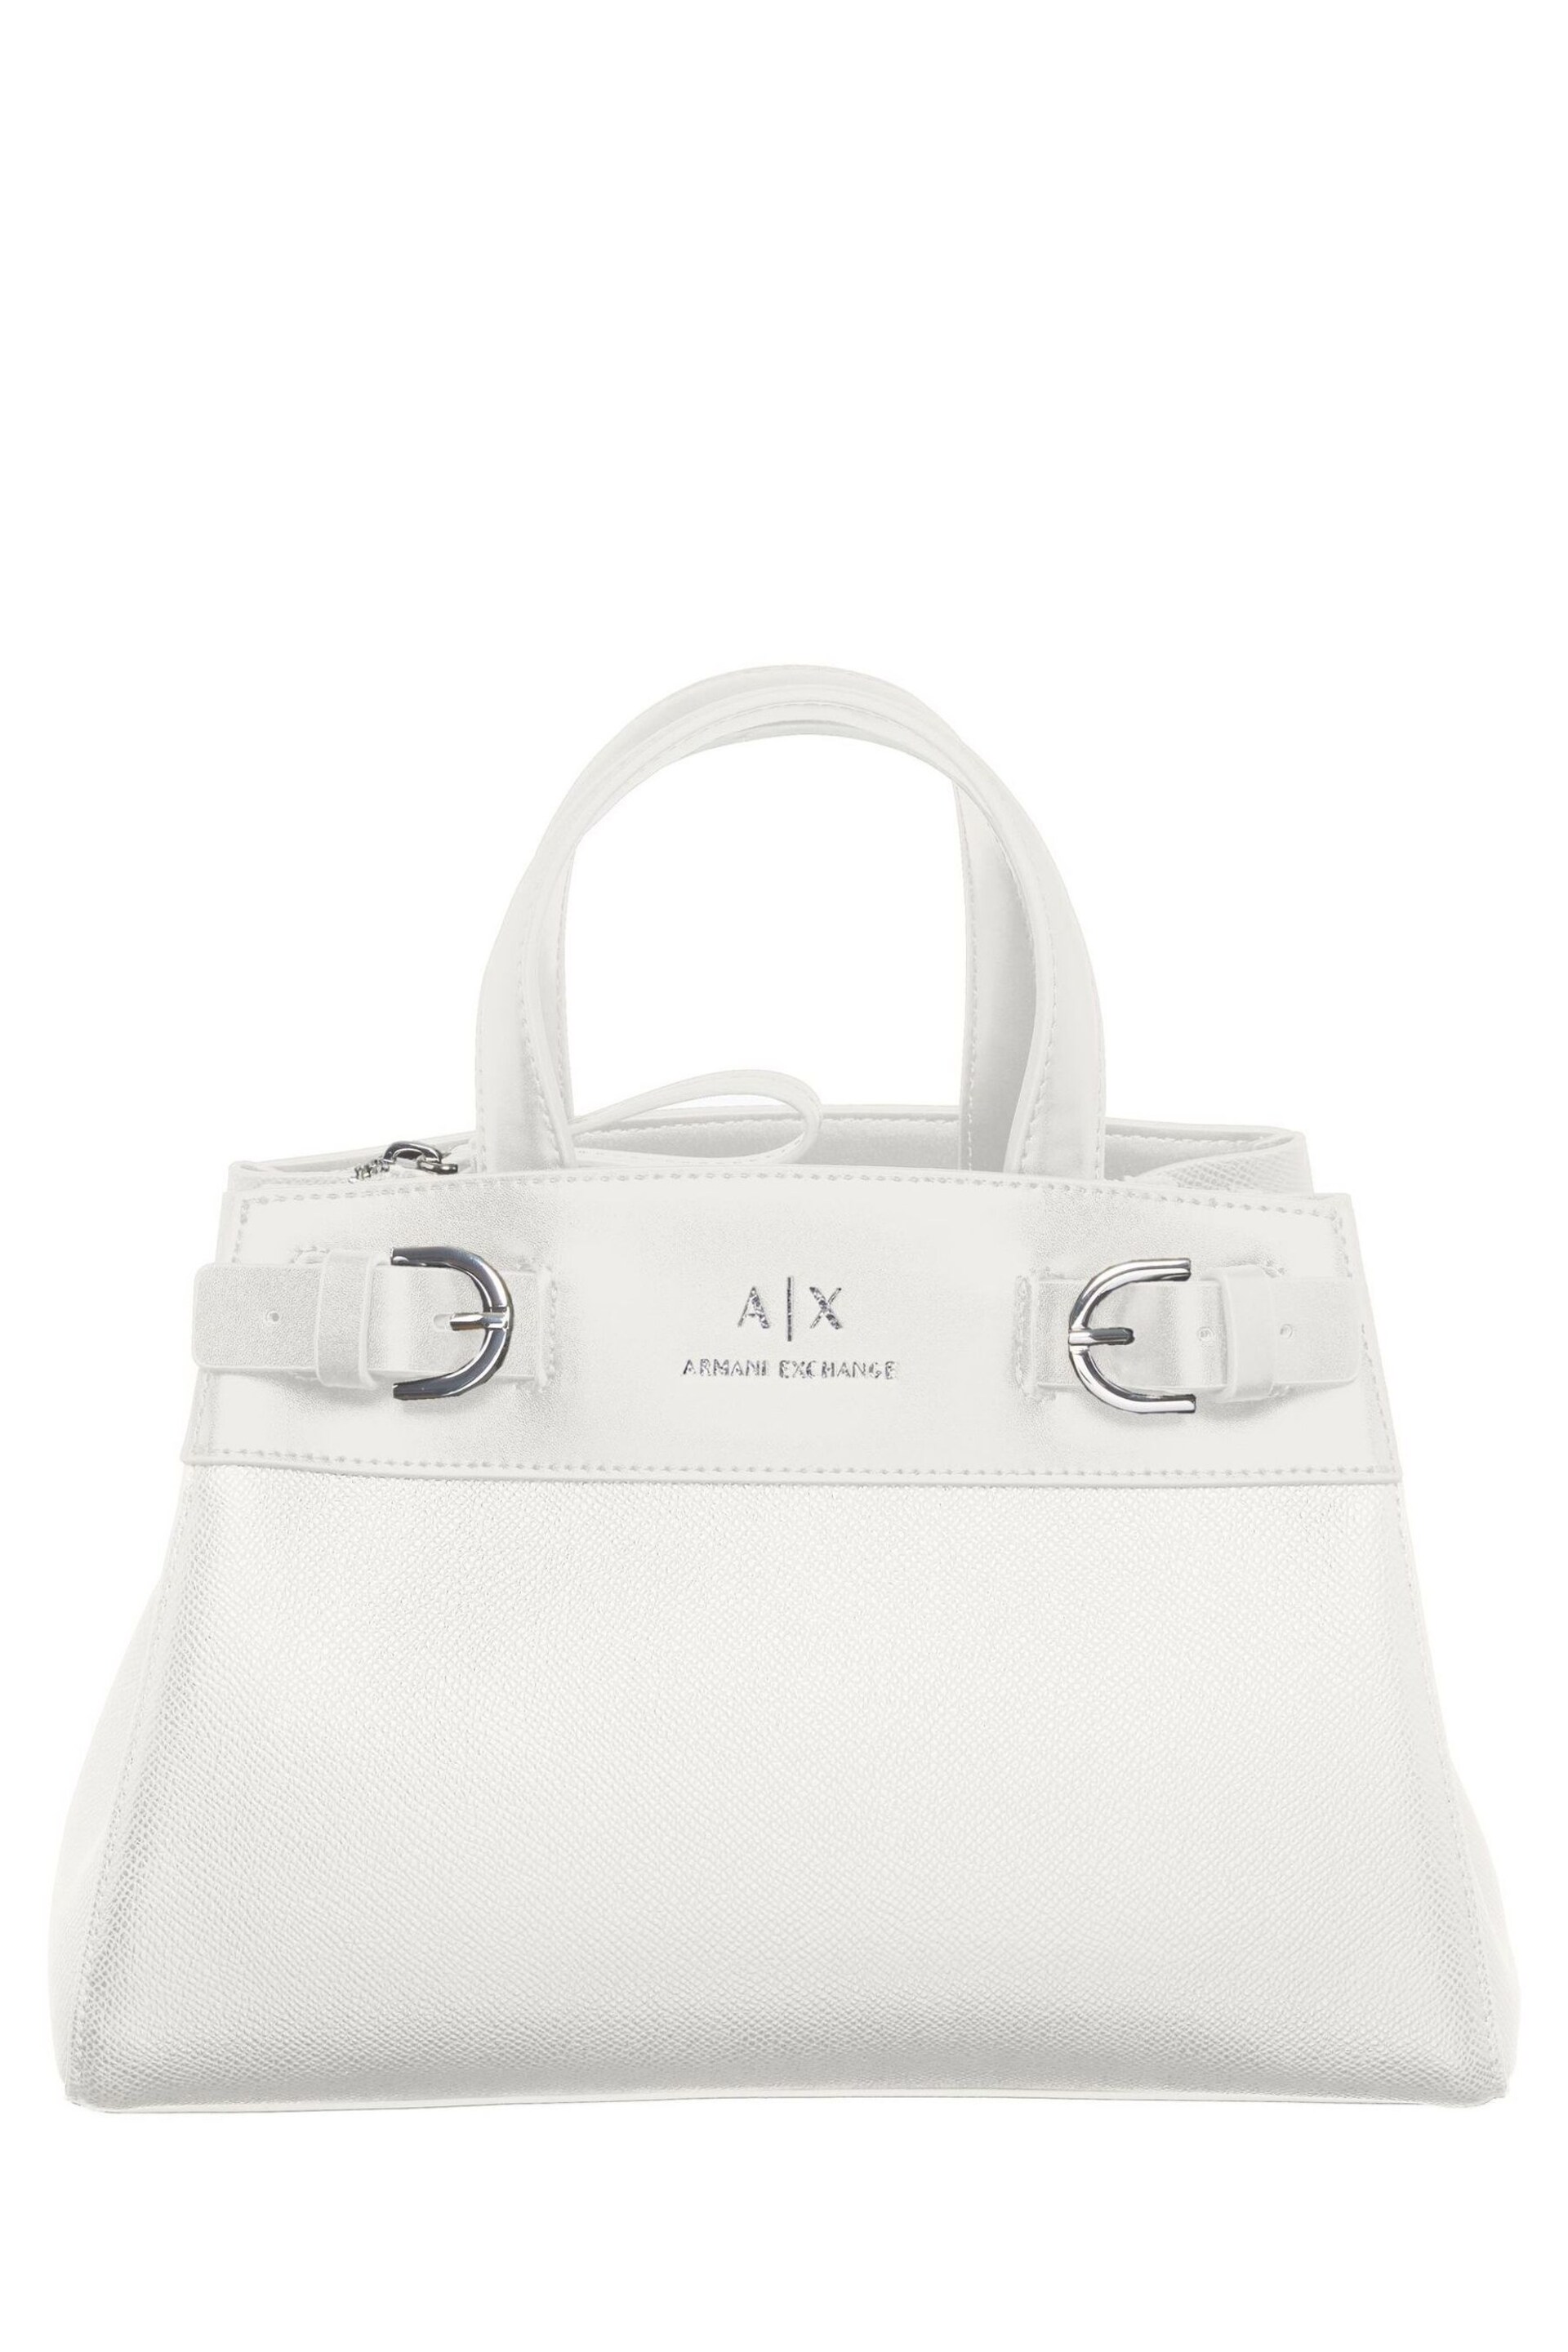 Armani Exchange Small Leather White Handbag - Image 1 of 1